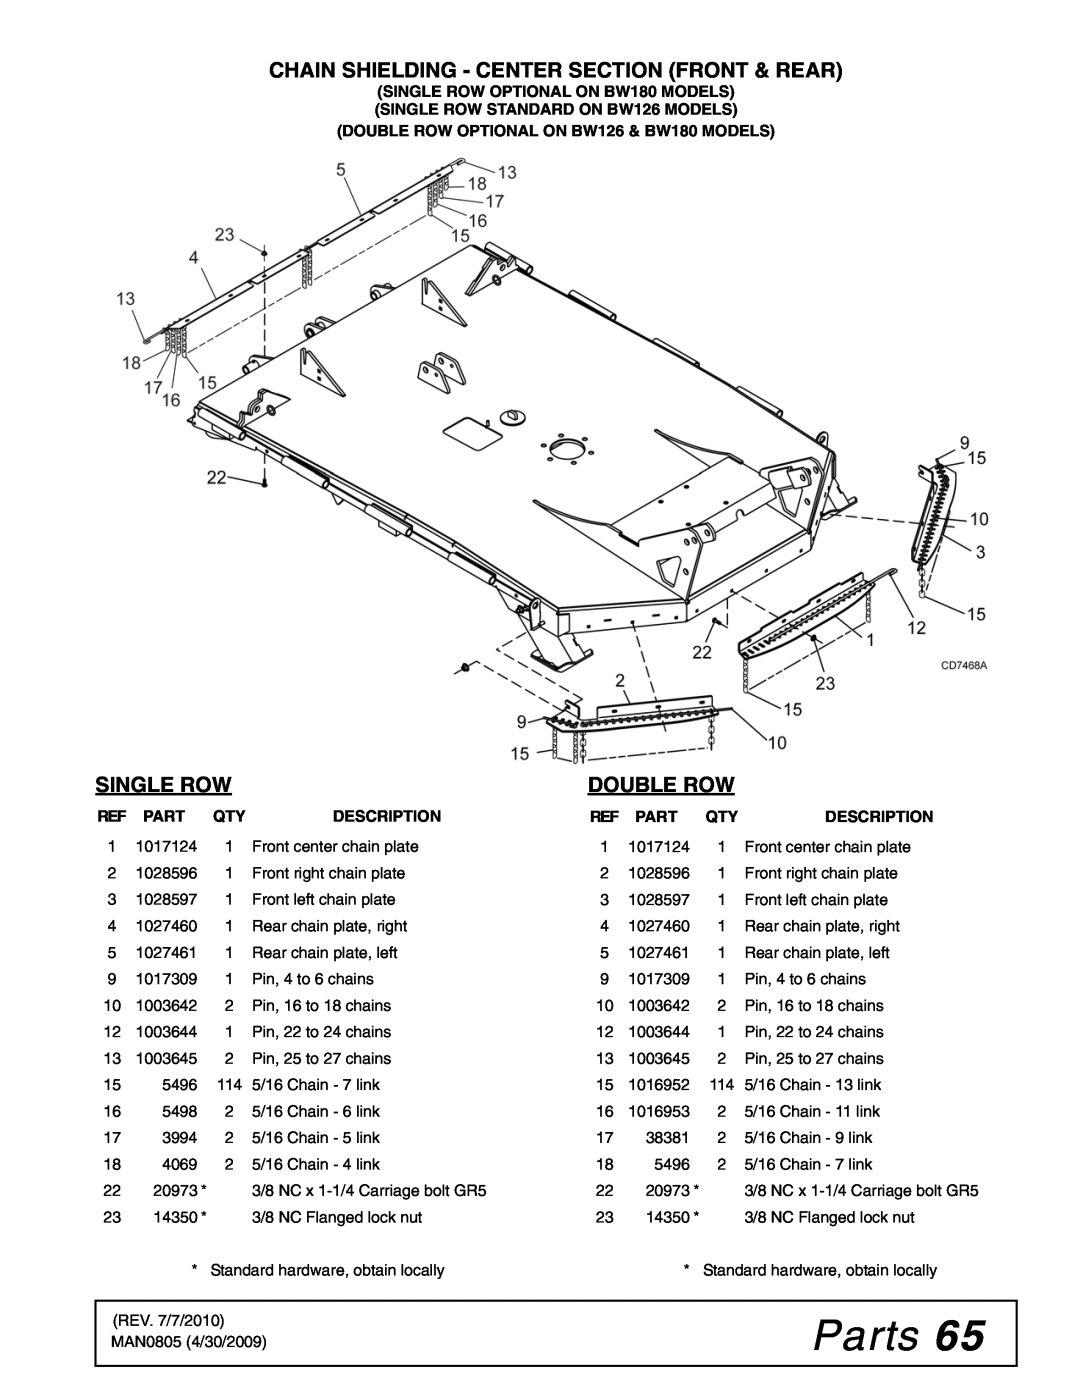 Woods Equipment BW126HBQ manual Parts, Chain Shielding - Center Section Front & Rear, Single Row, Double Row, Description 